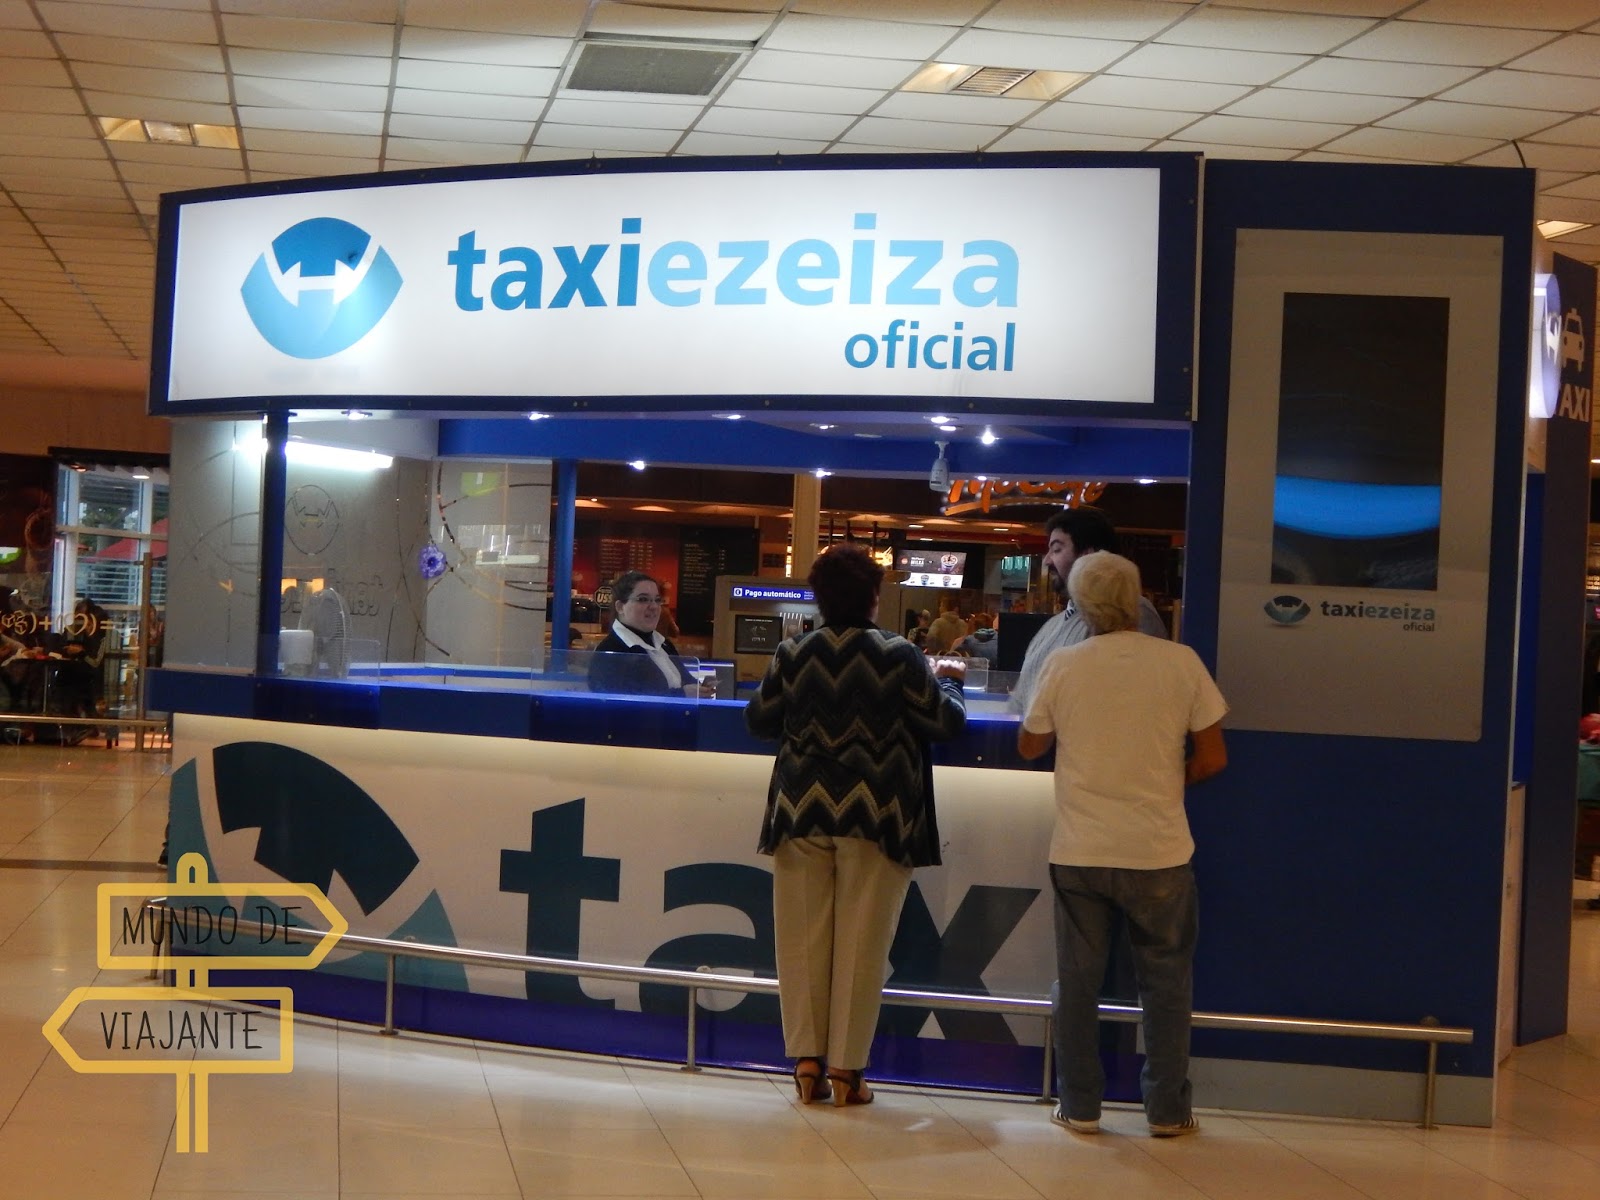 Aluguel de Carro no Aeroporto de Buenos Aires Ezeiza (EZE): Todas as dicas!  - 2021